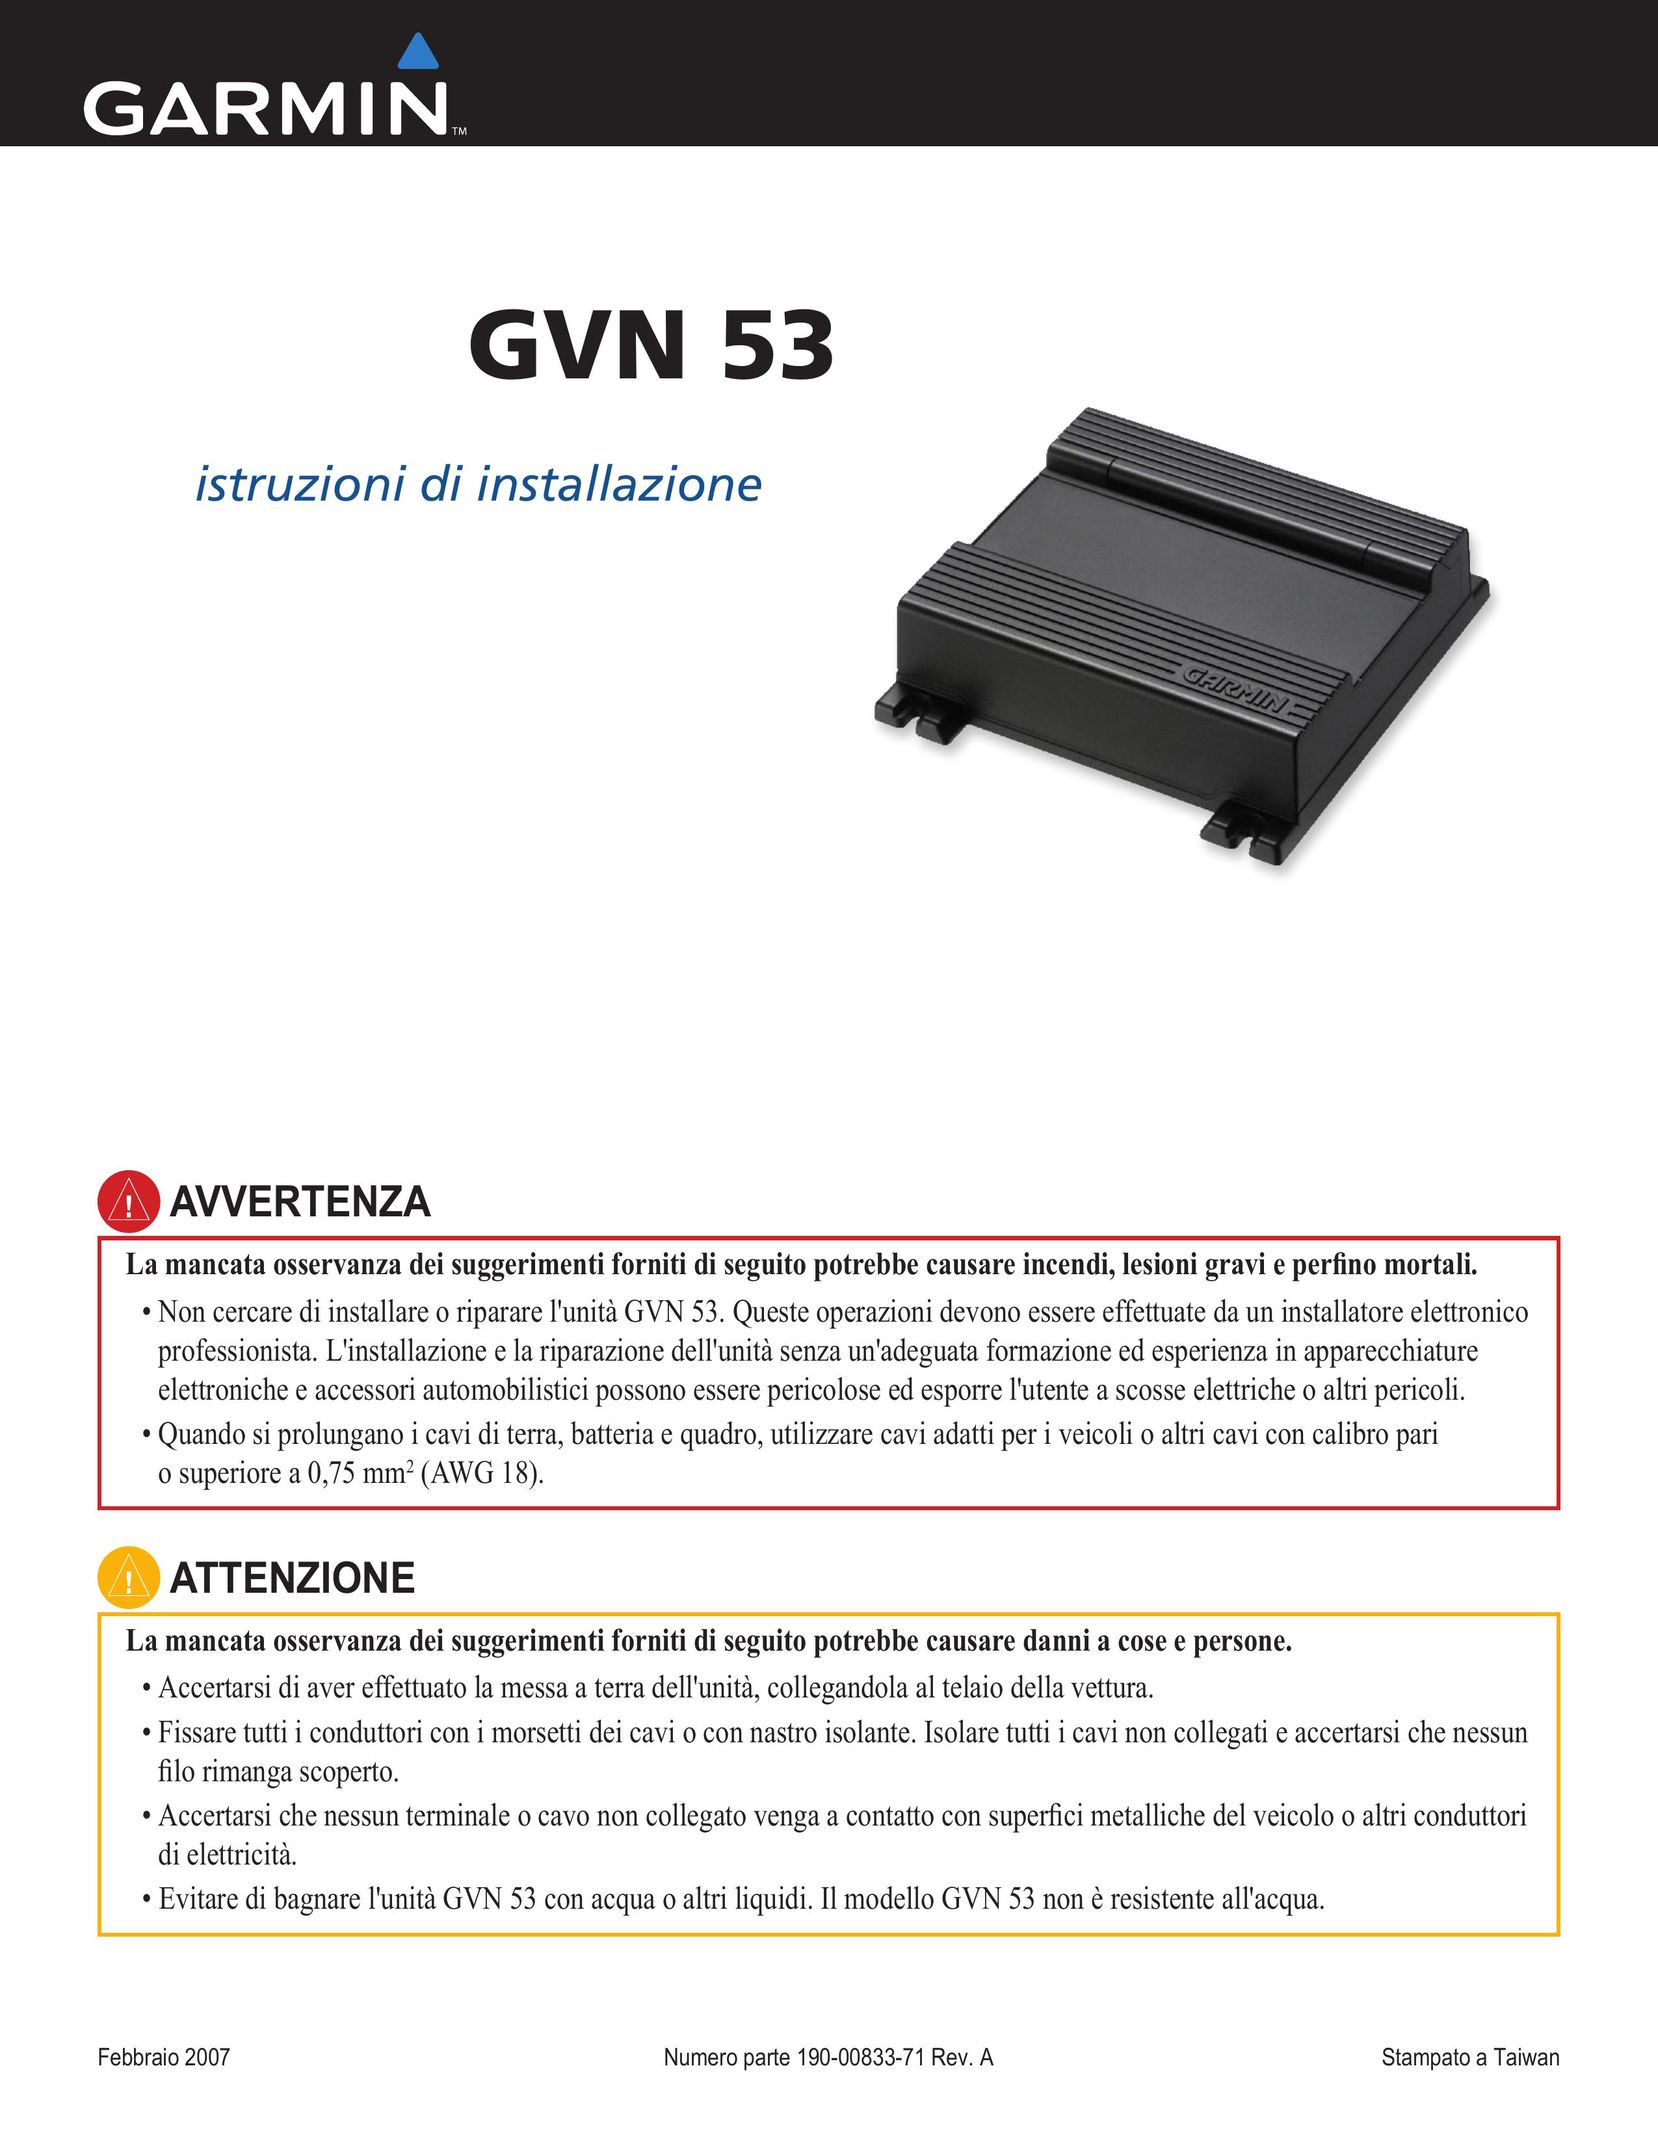 Garmin GVN 53 Car Stereo System User Manual